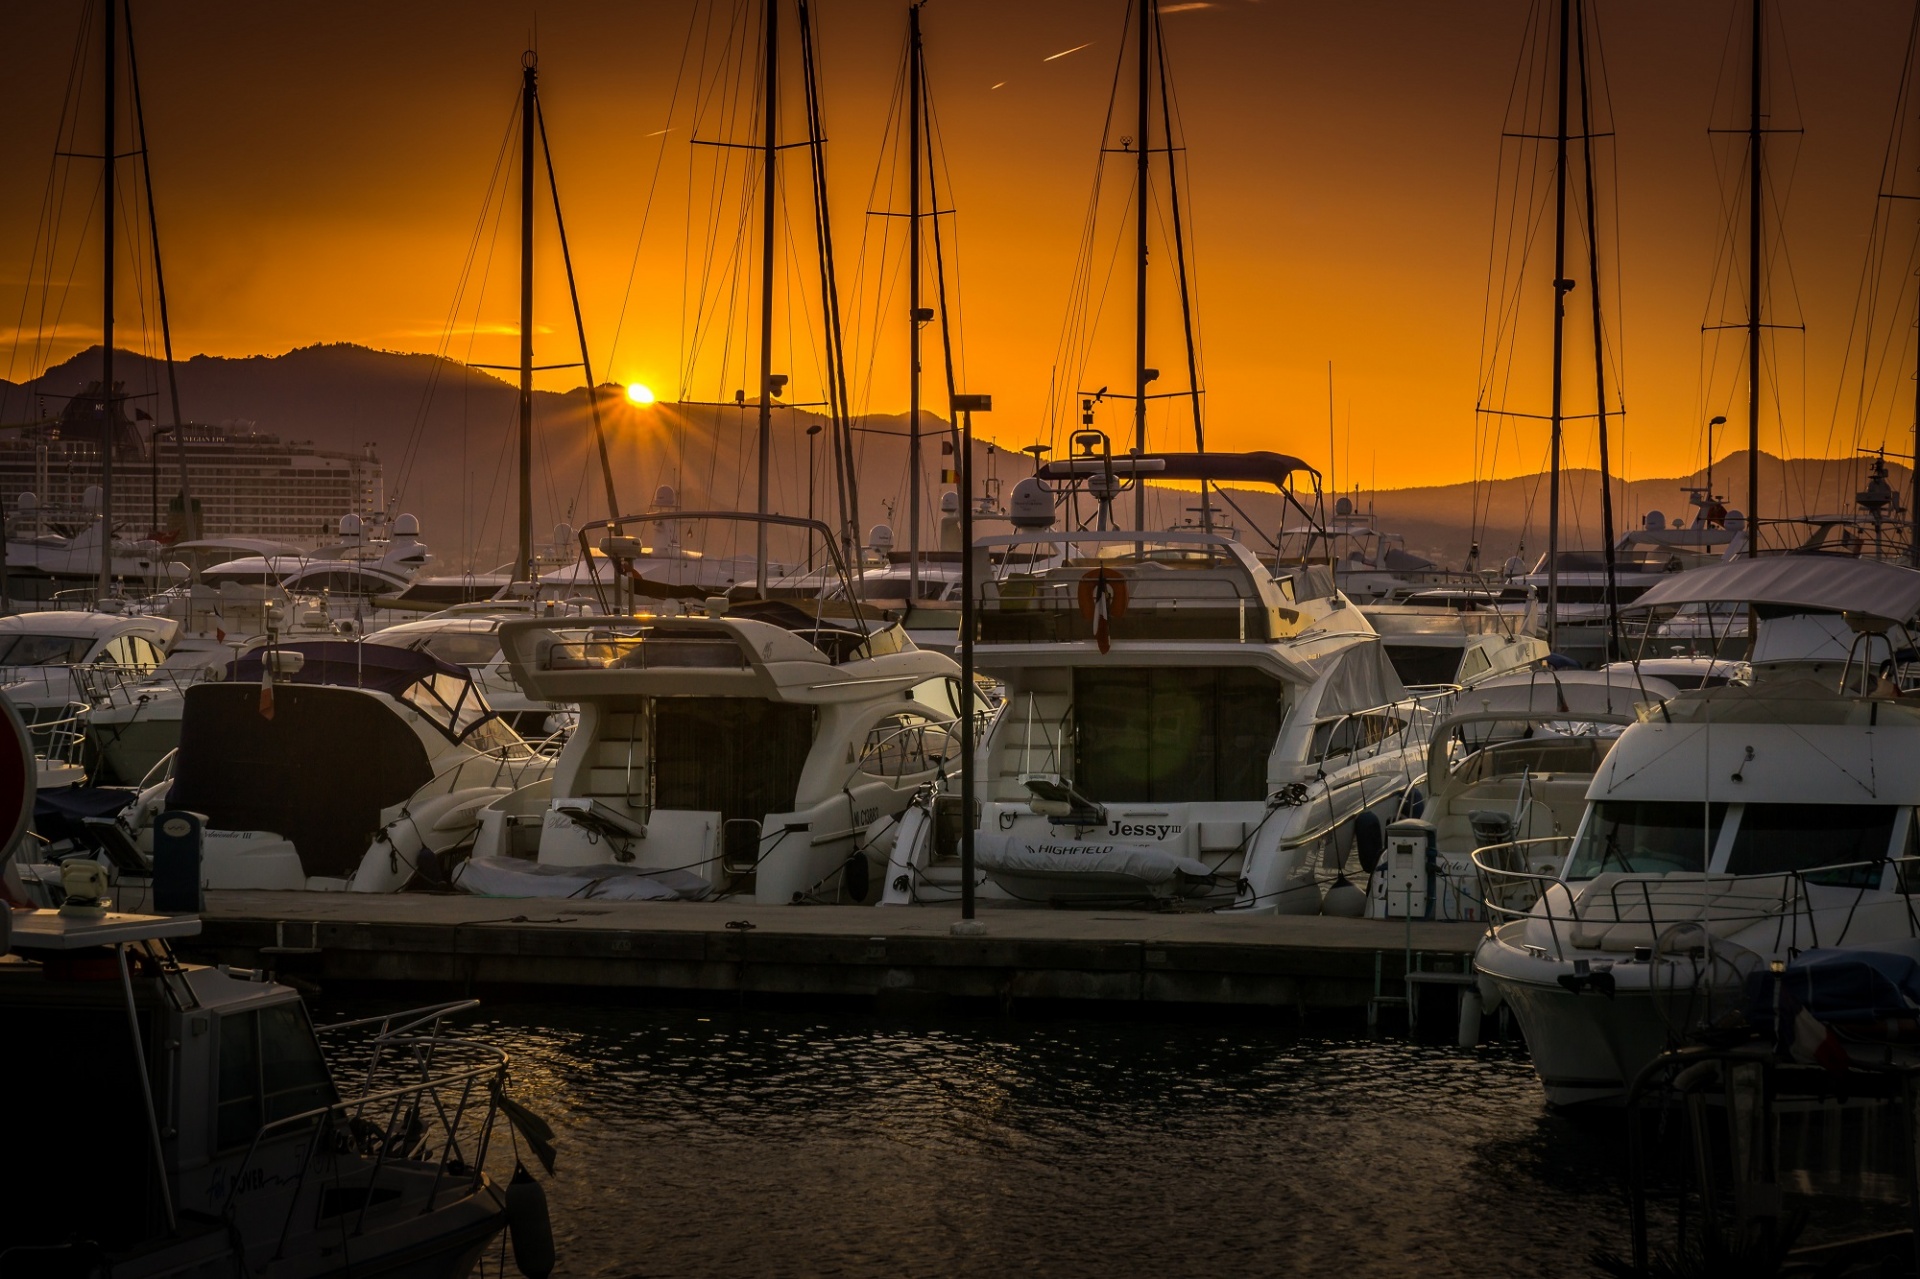 Sunset At The Marina